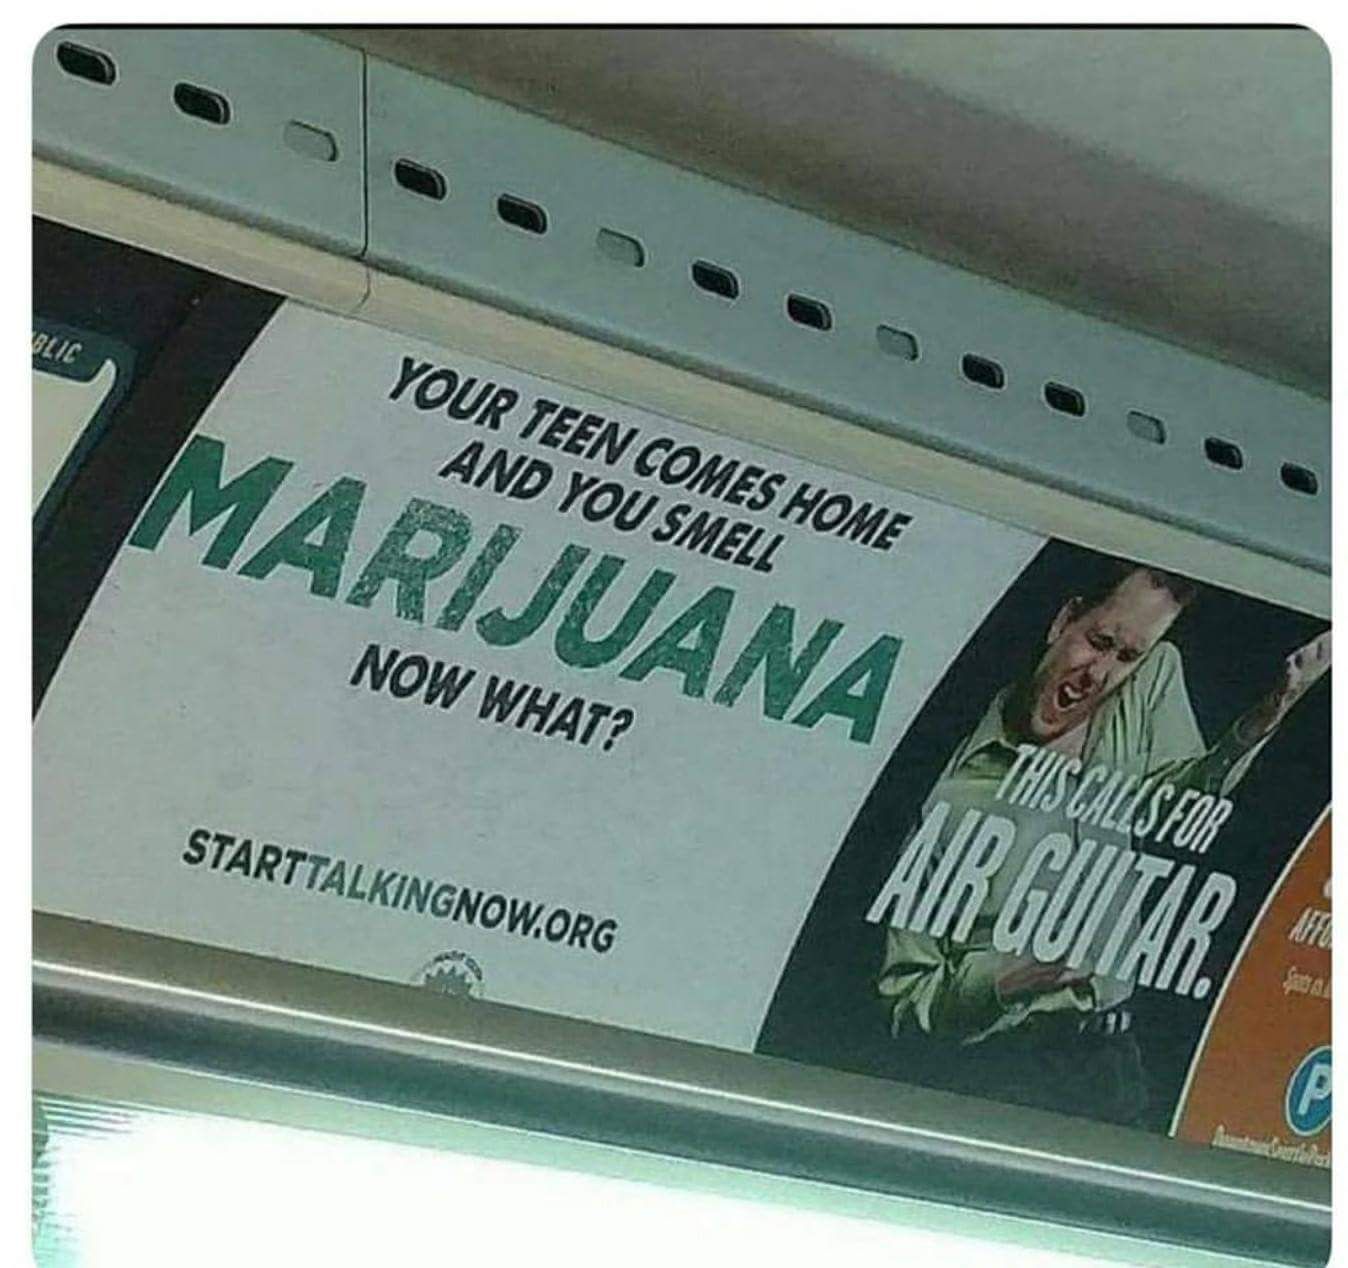 Your teen comes home & you smell marijuana...